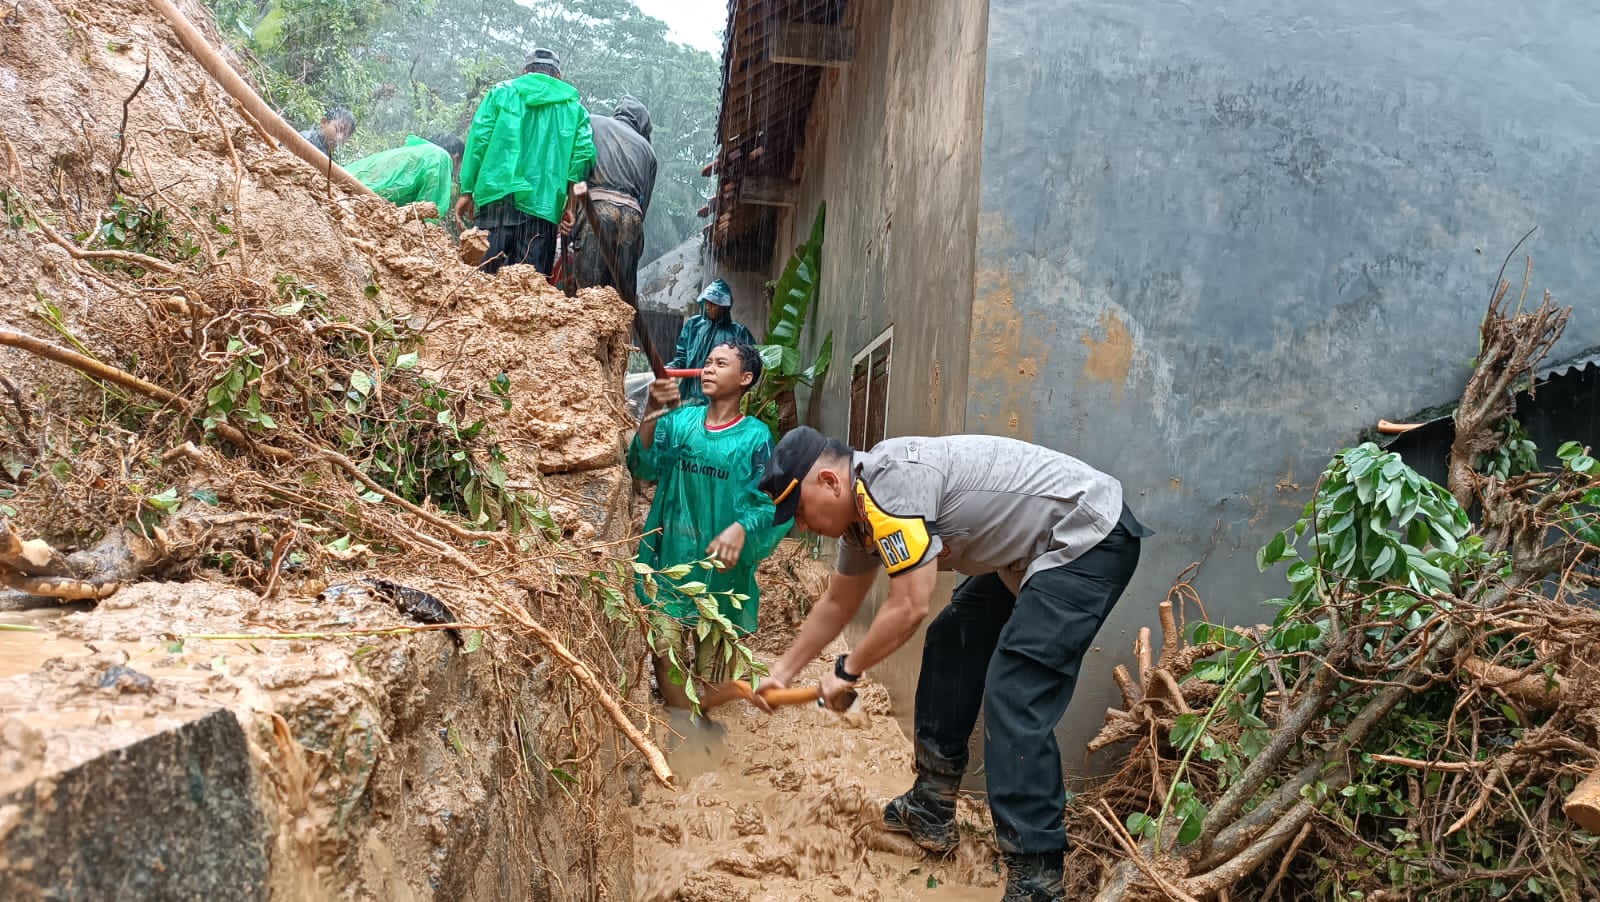 Tanggap Bencana, Polisi Bantu Evakuasi Korban Banjir dan Tanah Longsor di Malang